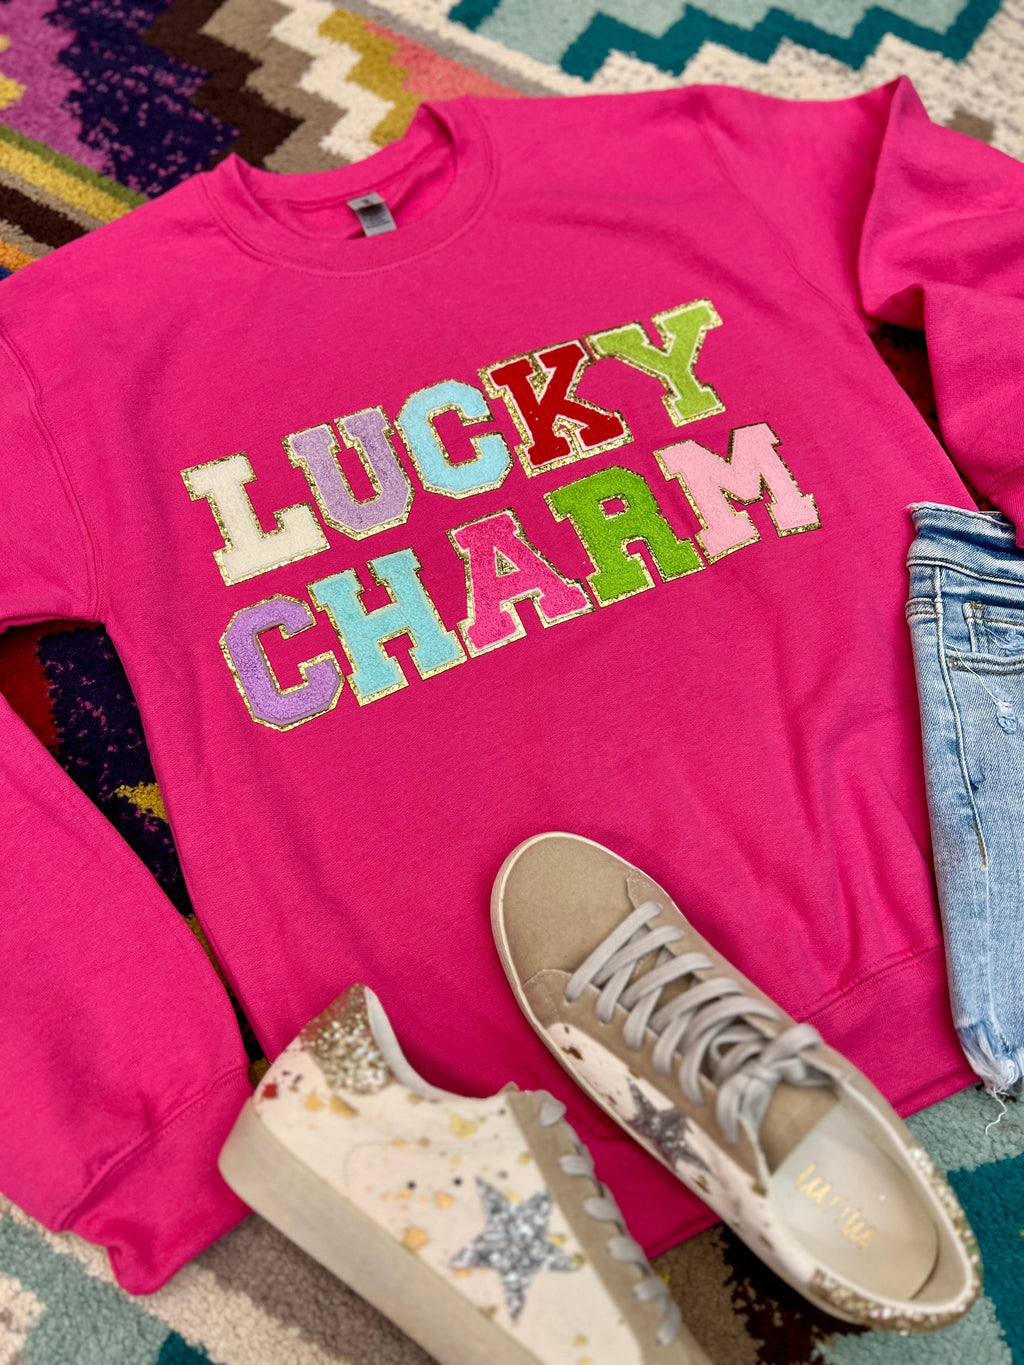 Plus Lucky Charm Sweatshirt | gussieduponline